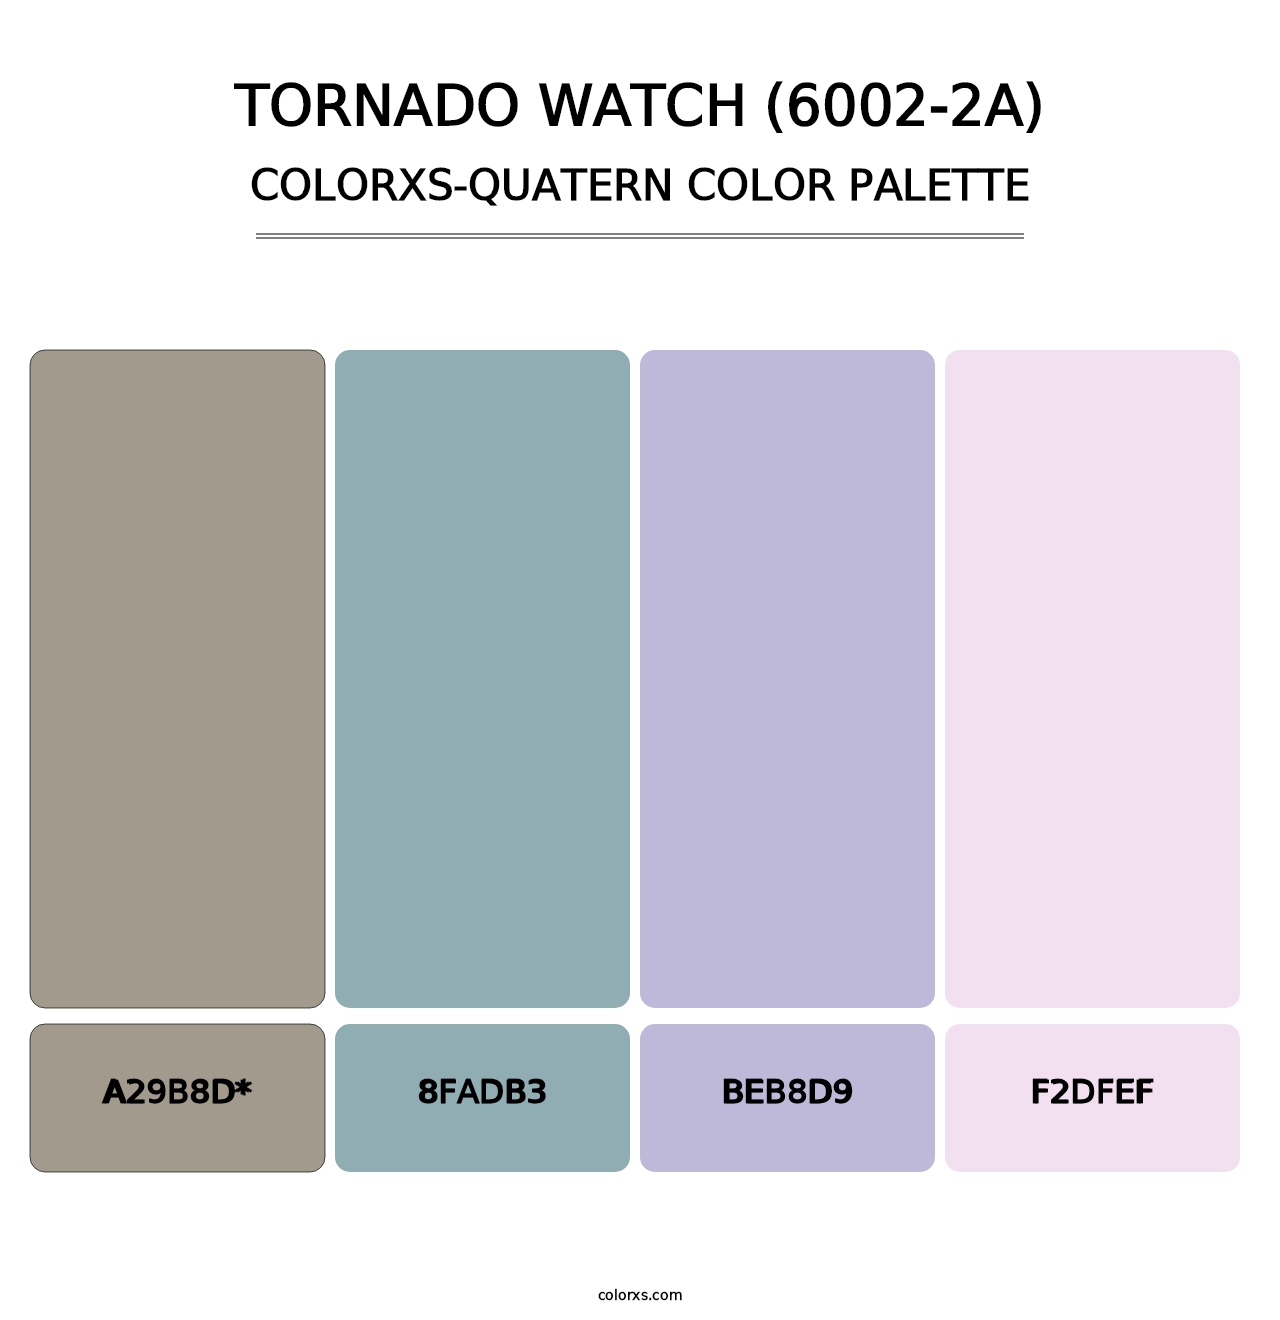 Tornado Watch (6002-2A) - Colorxs Quatern Palette